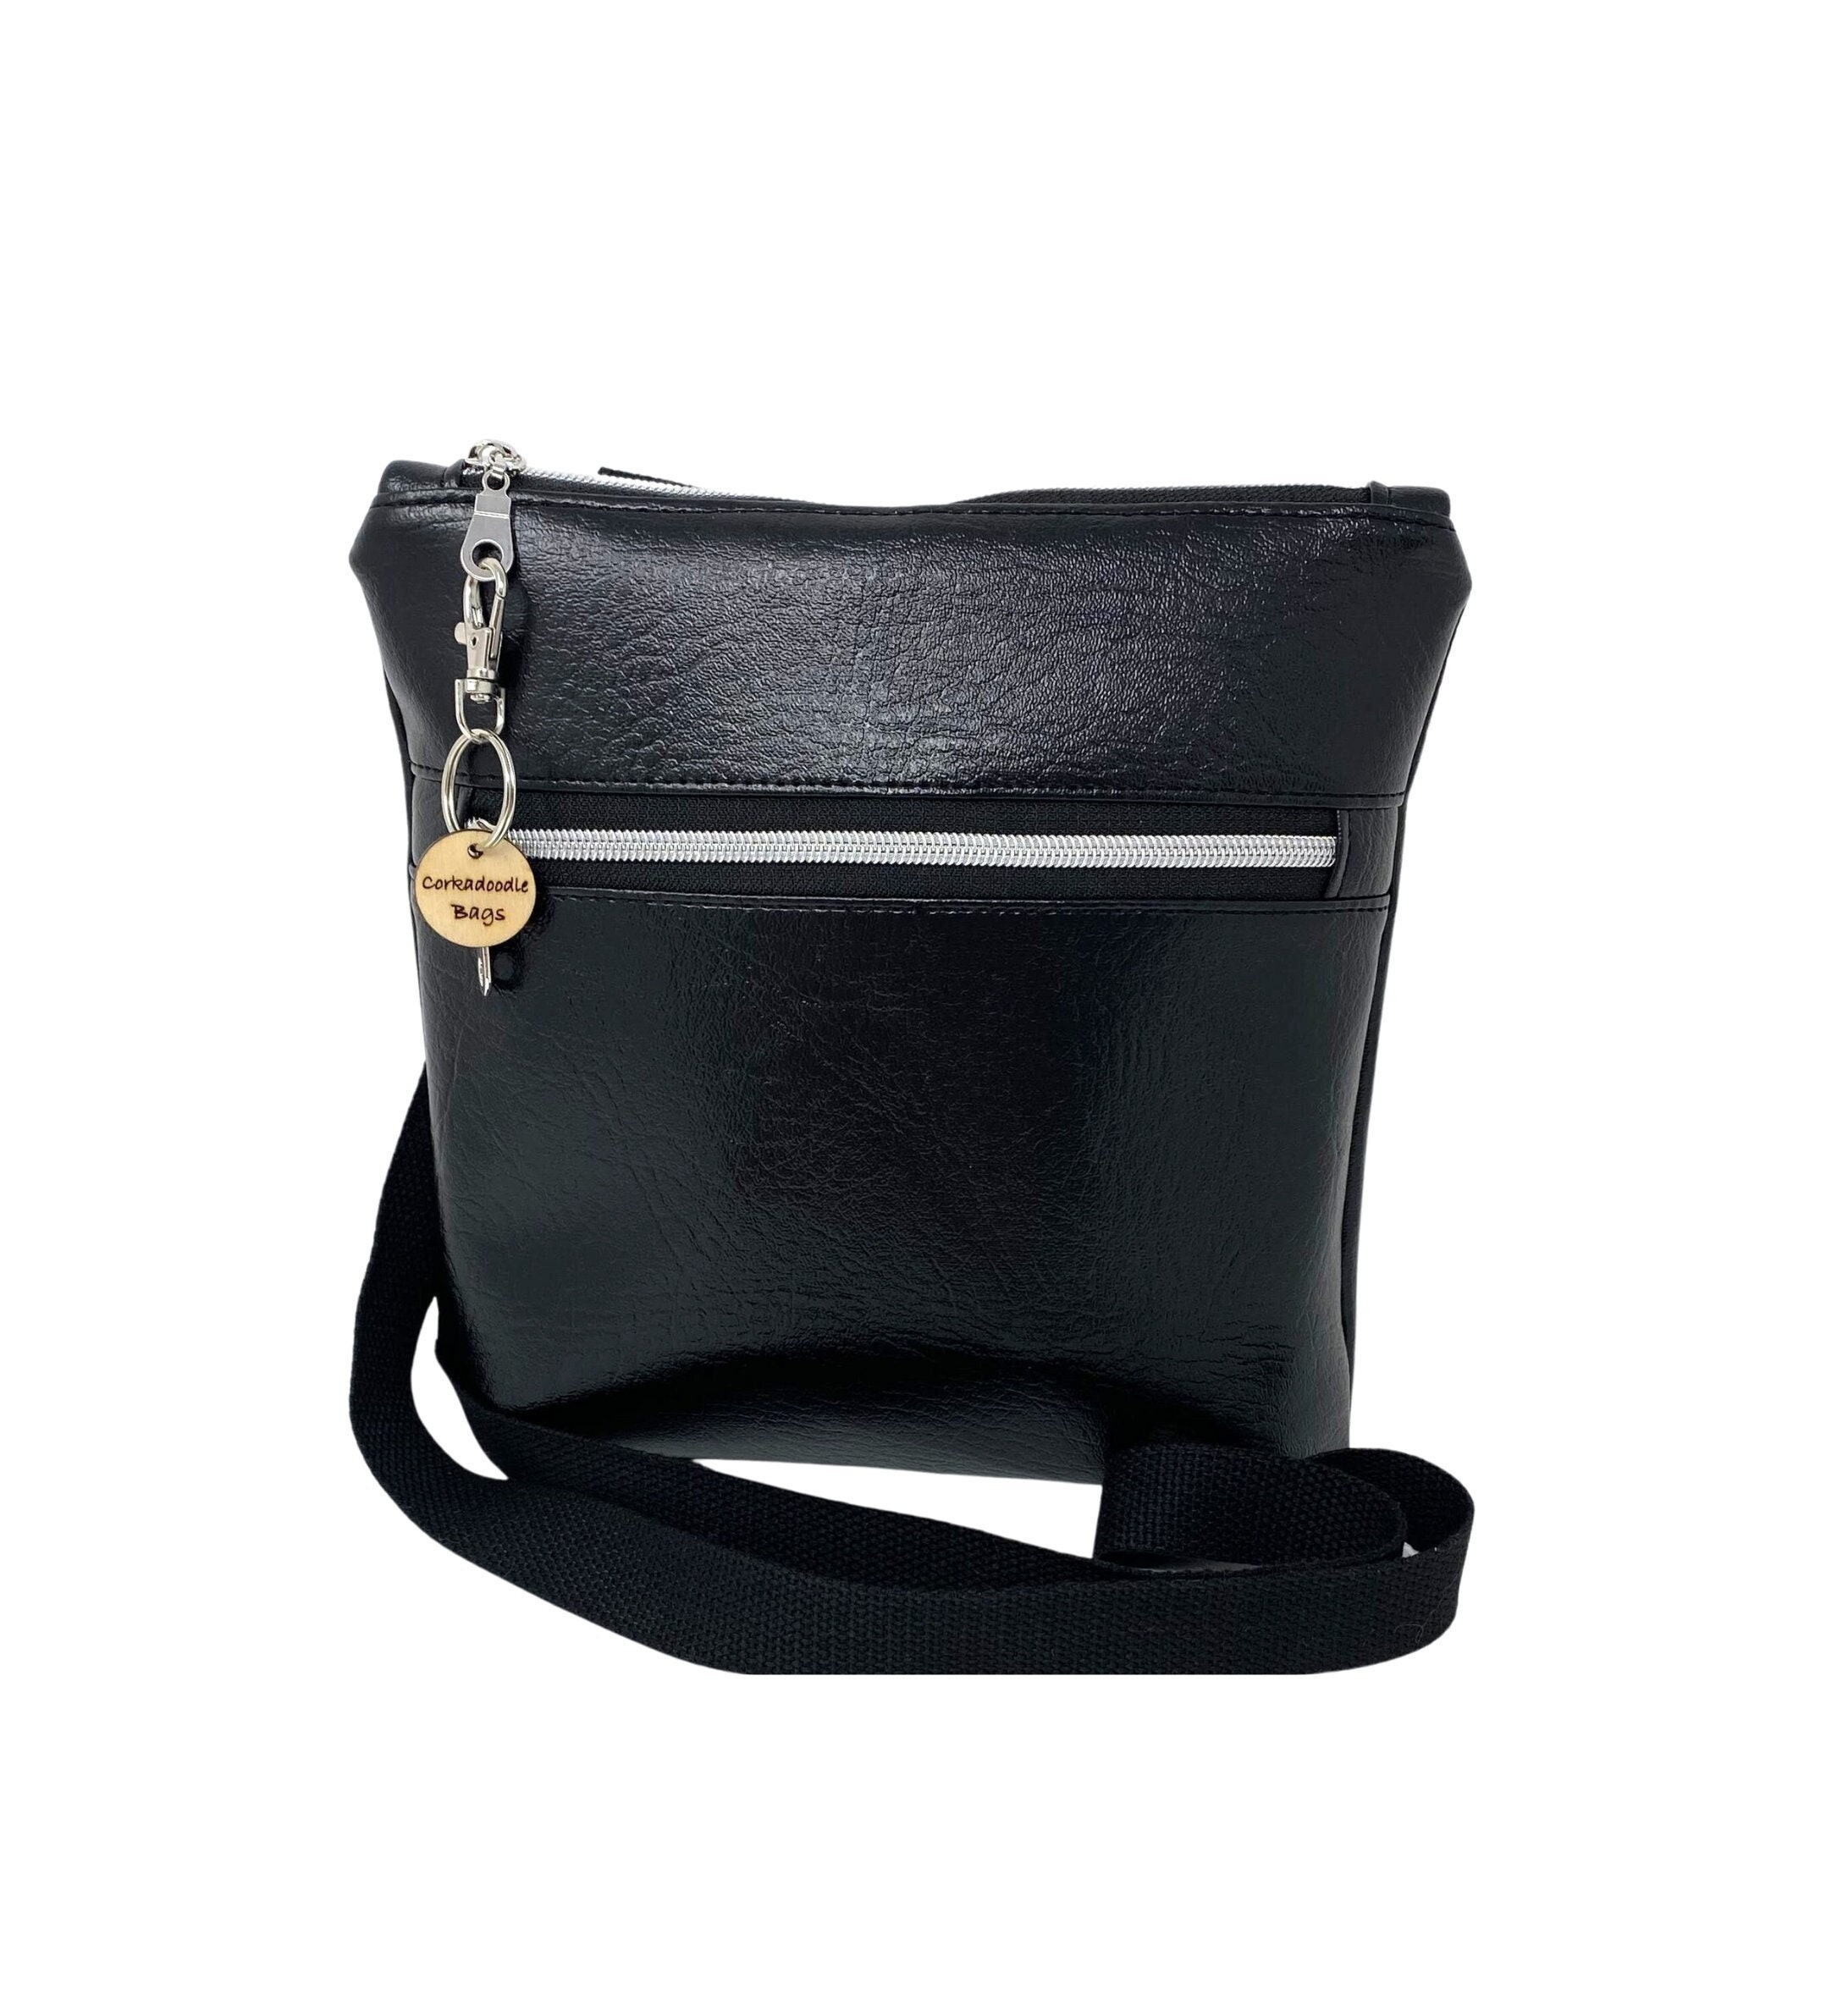 Lumisonata Small Quilted Crossbody Bags for Women Handbags LED Shoulder Bag Mini Designer Trendy Purses Leather Black Evening Bag Light Up Clutch